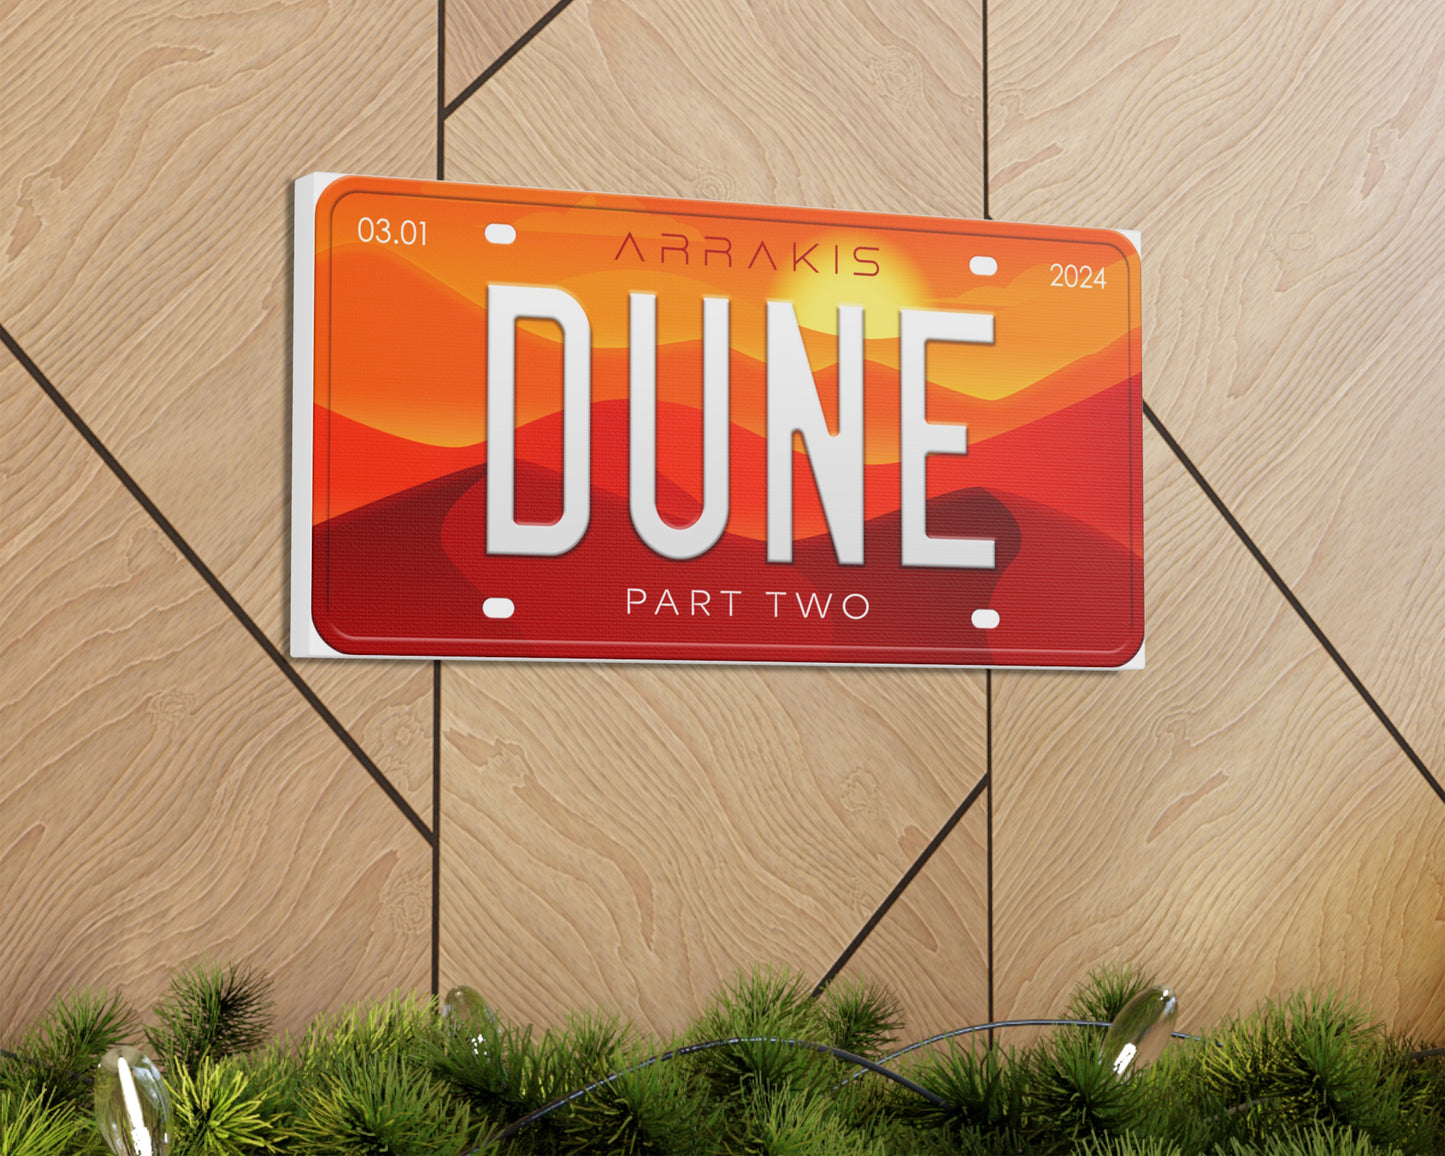 Dune Part 2 (2024) movie canvas wall decor